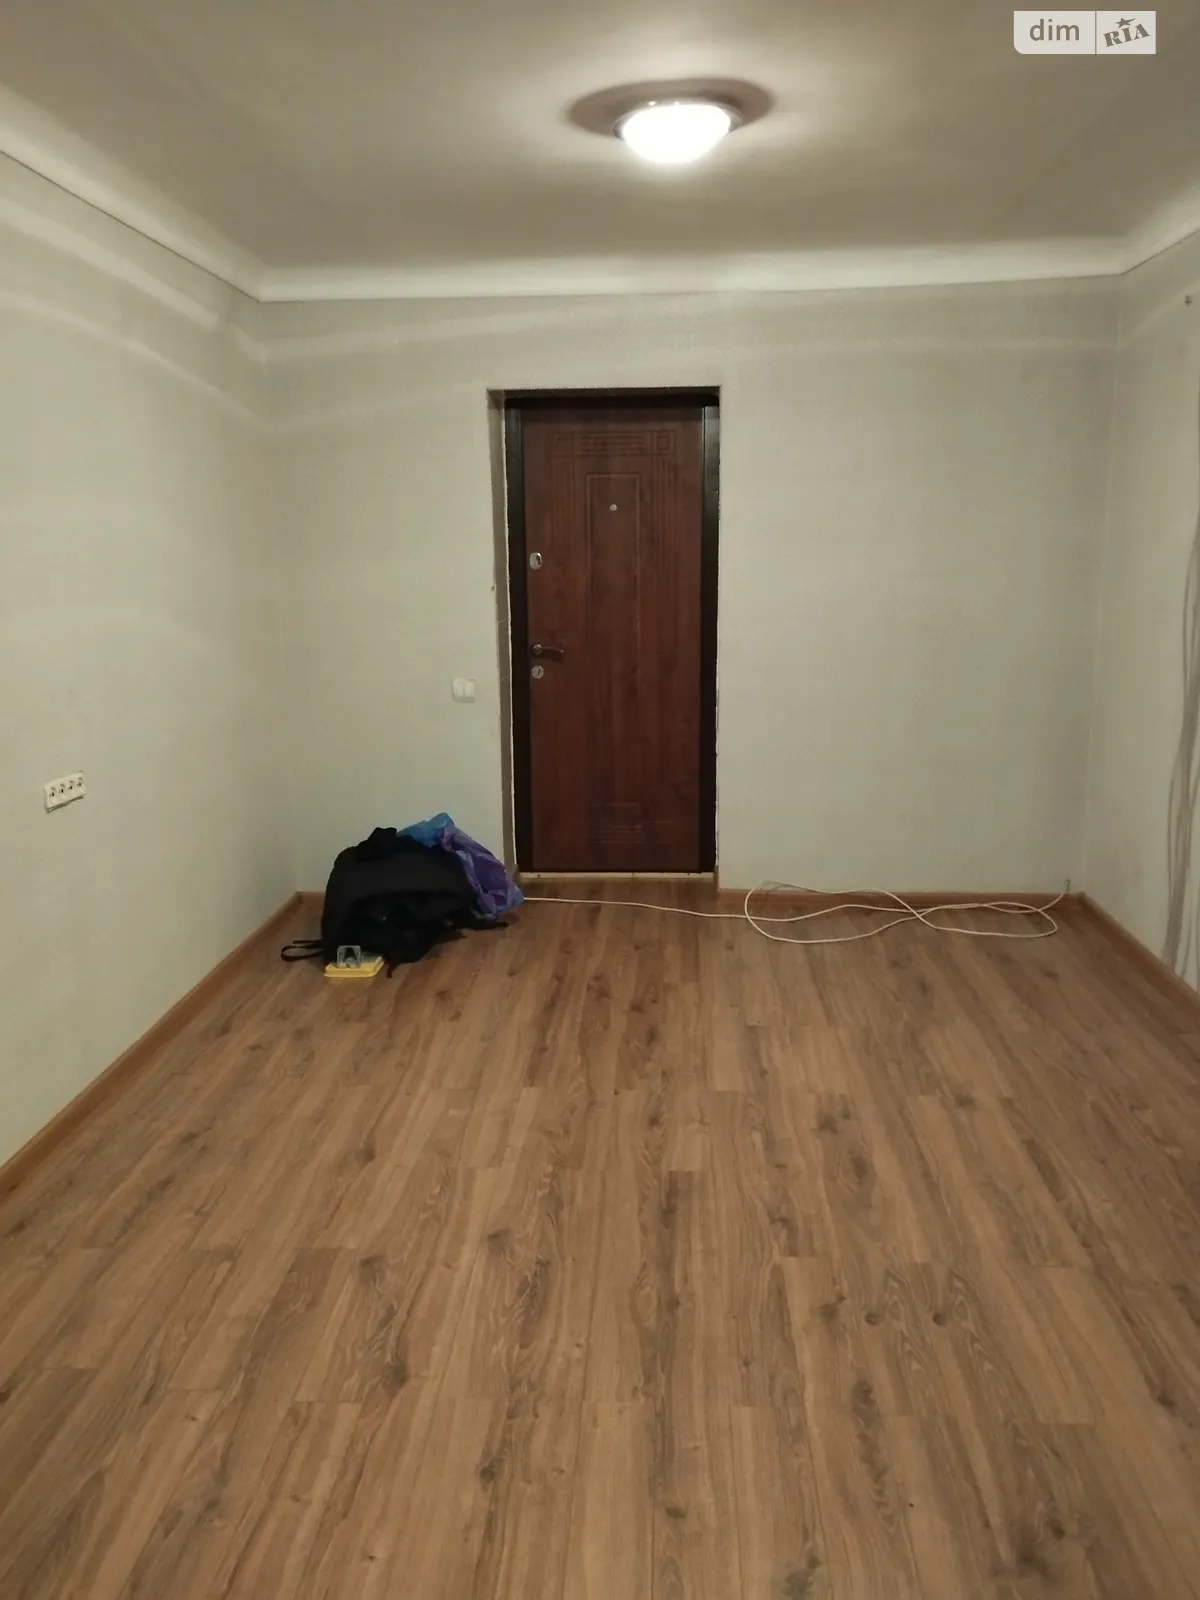 Продается комната 18 кв. м в Ровно - фото 2